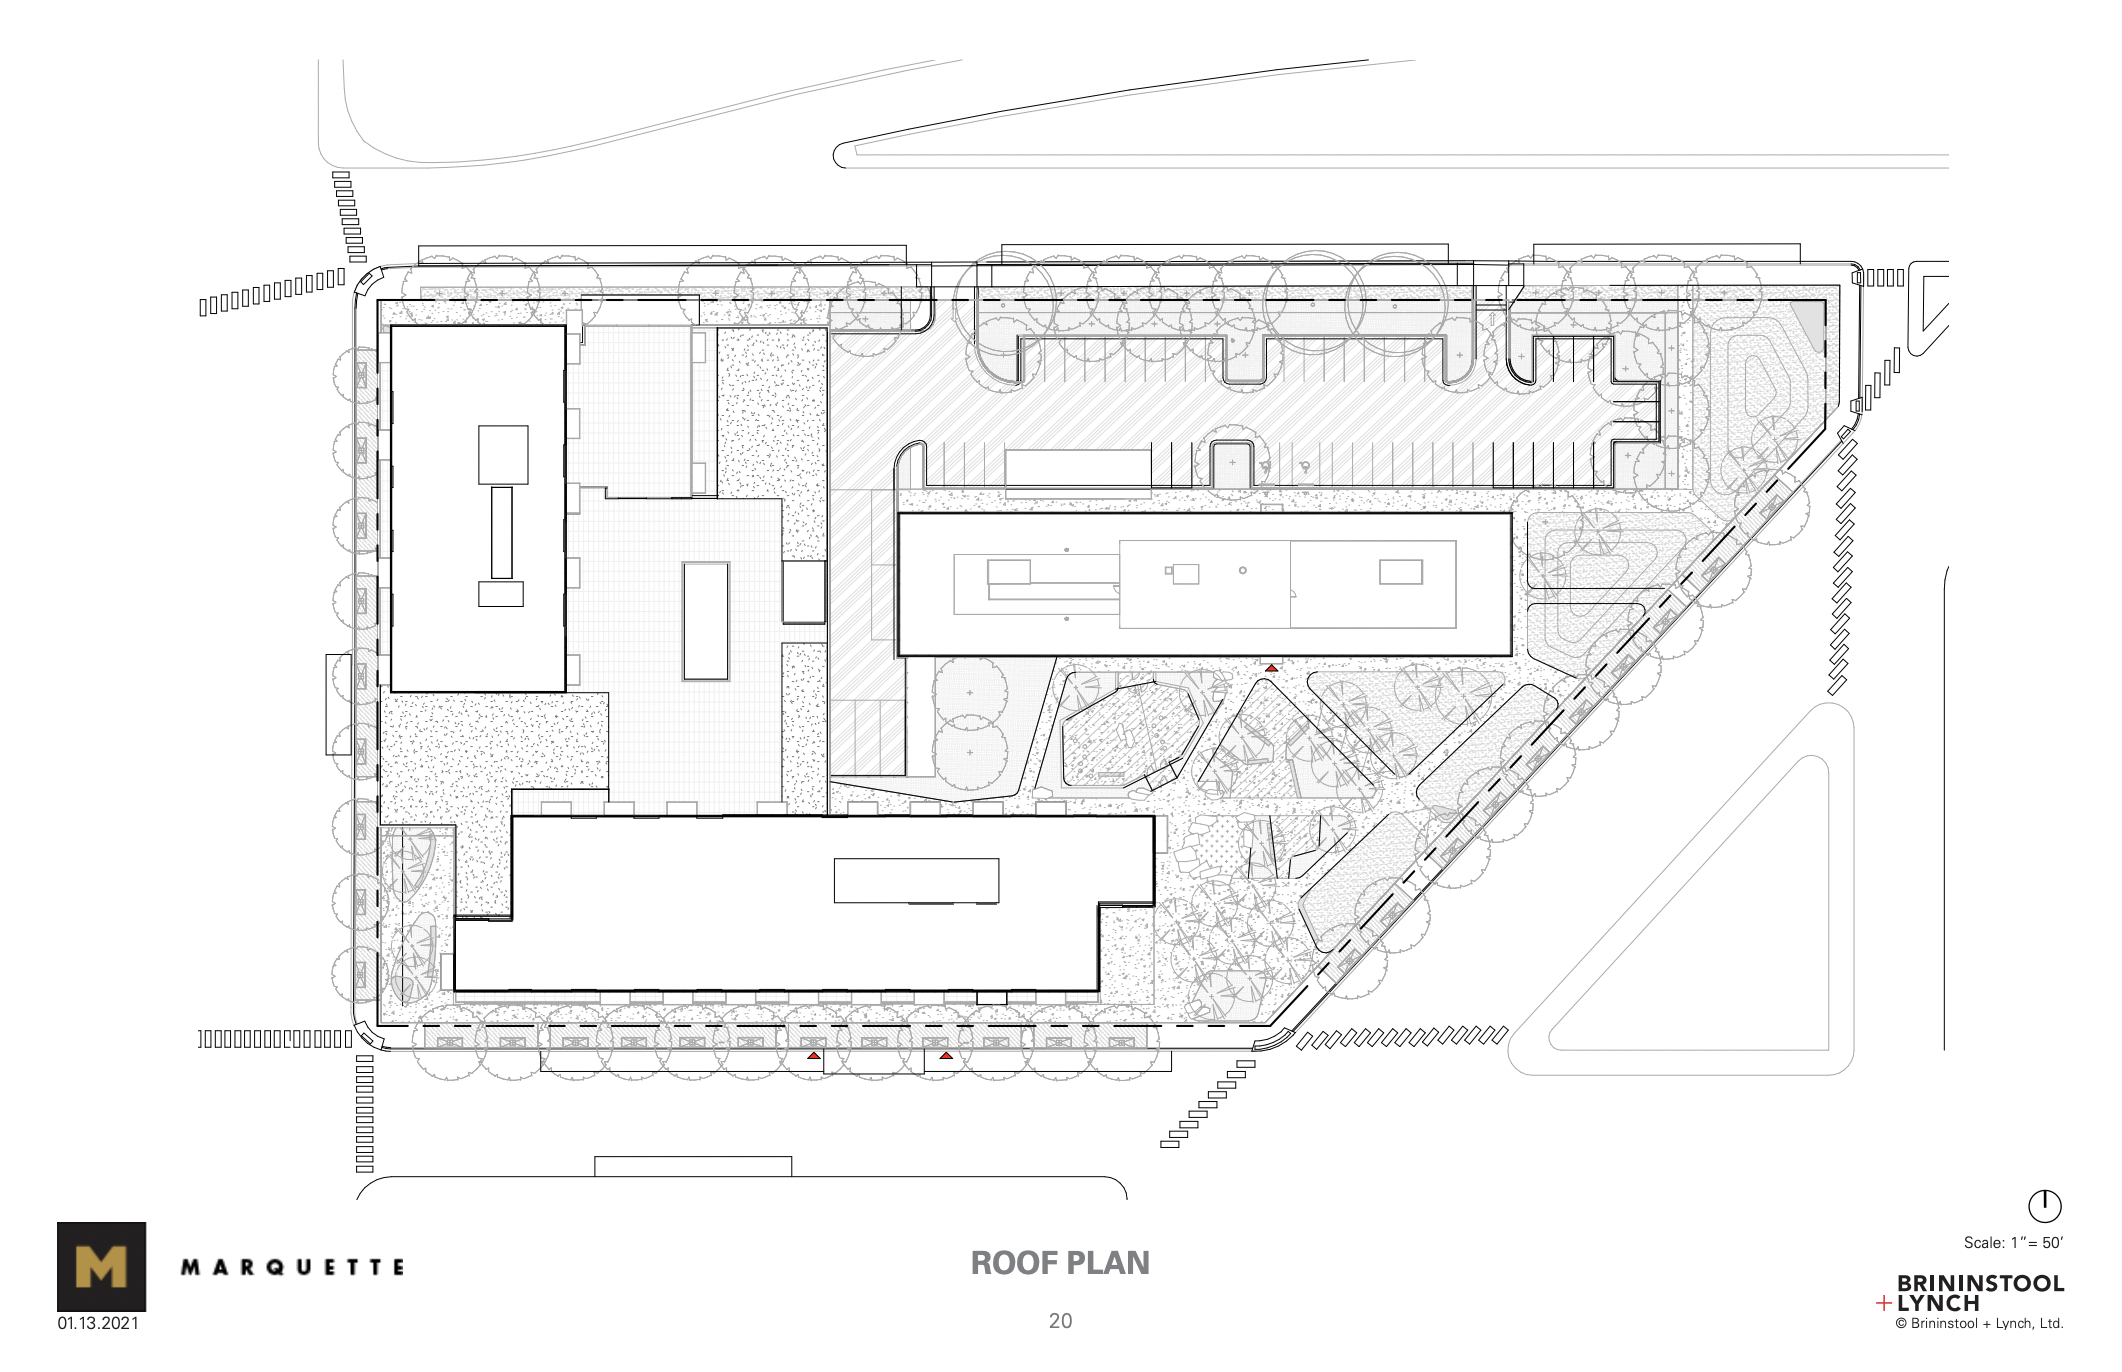 Site map for three-part masterplan (513 S Damen Avenue in upper left)